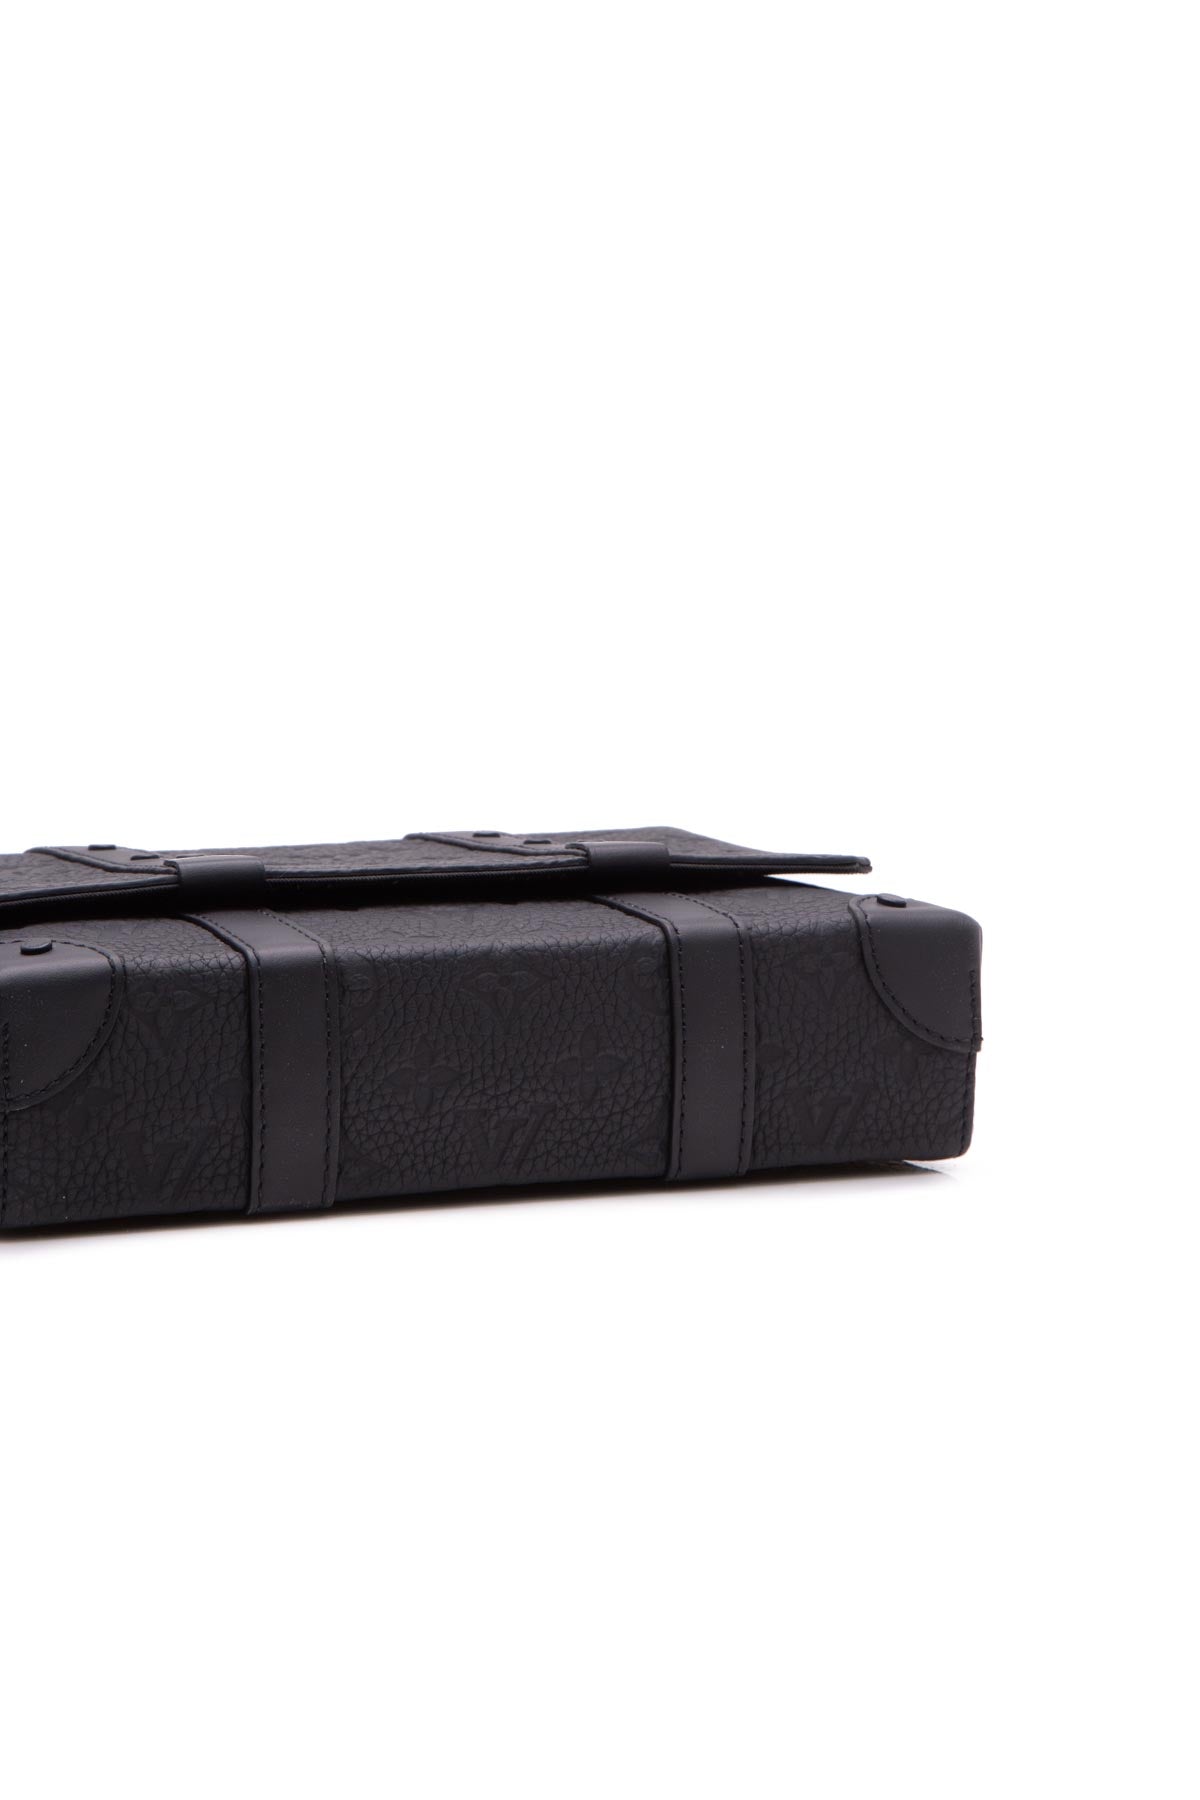 Messenger soft trunk bag Louis Vuitton Black in Polyester - 33788249